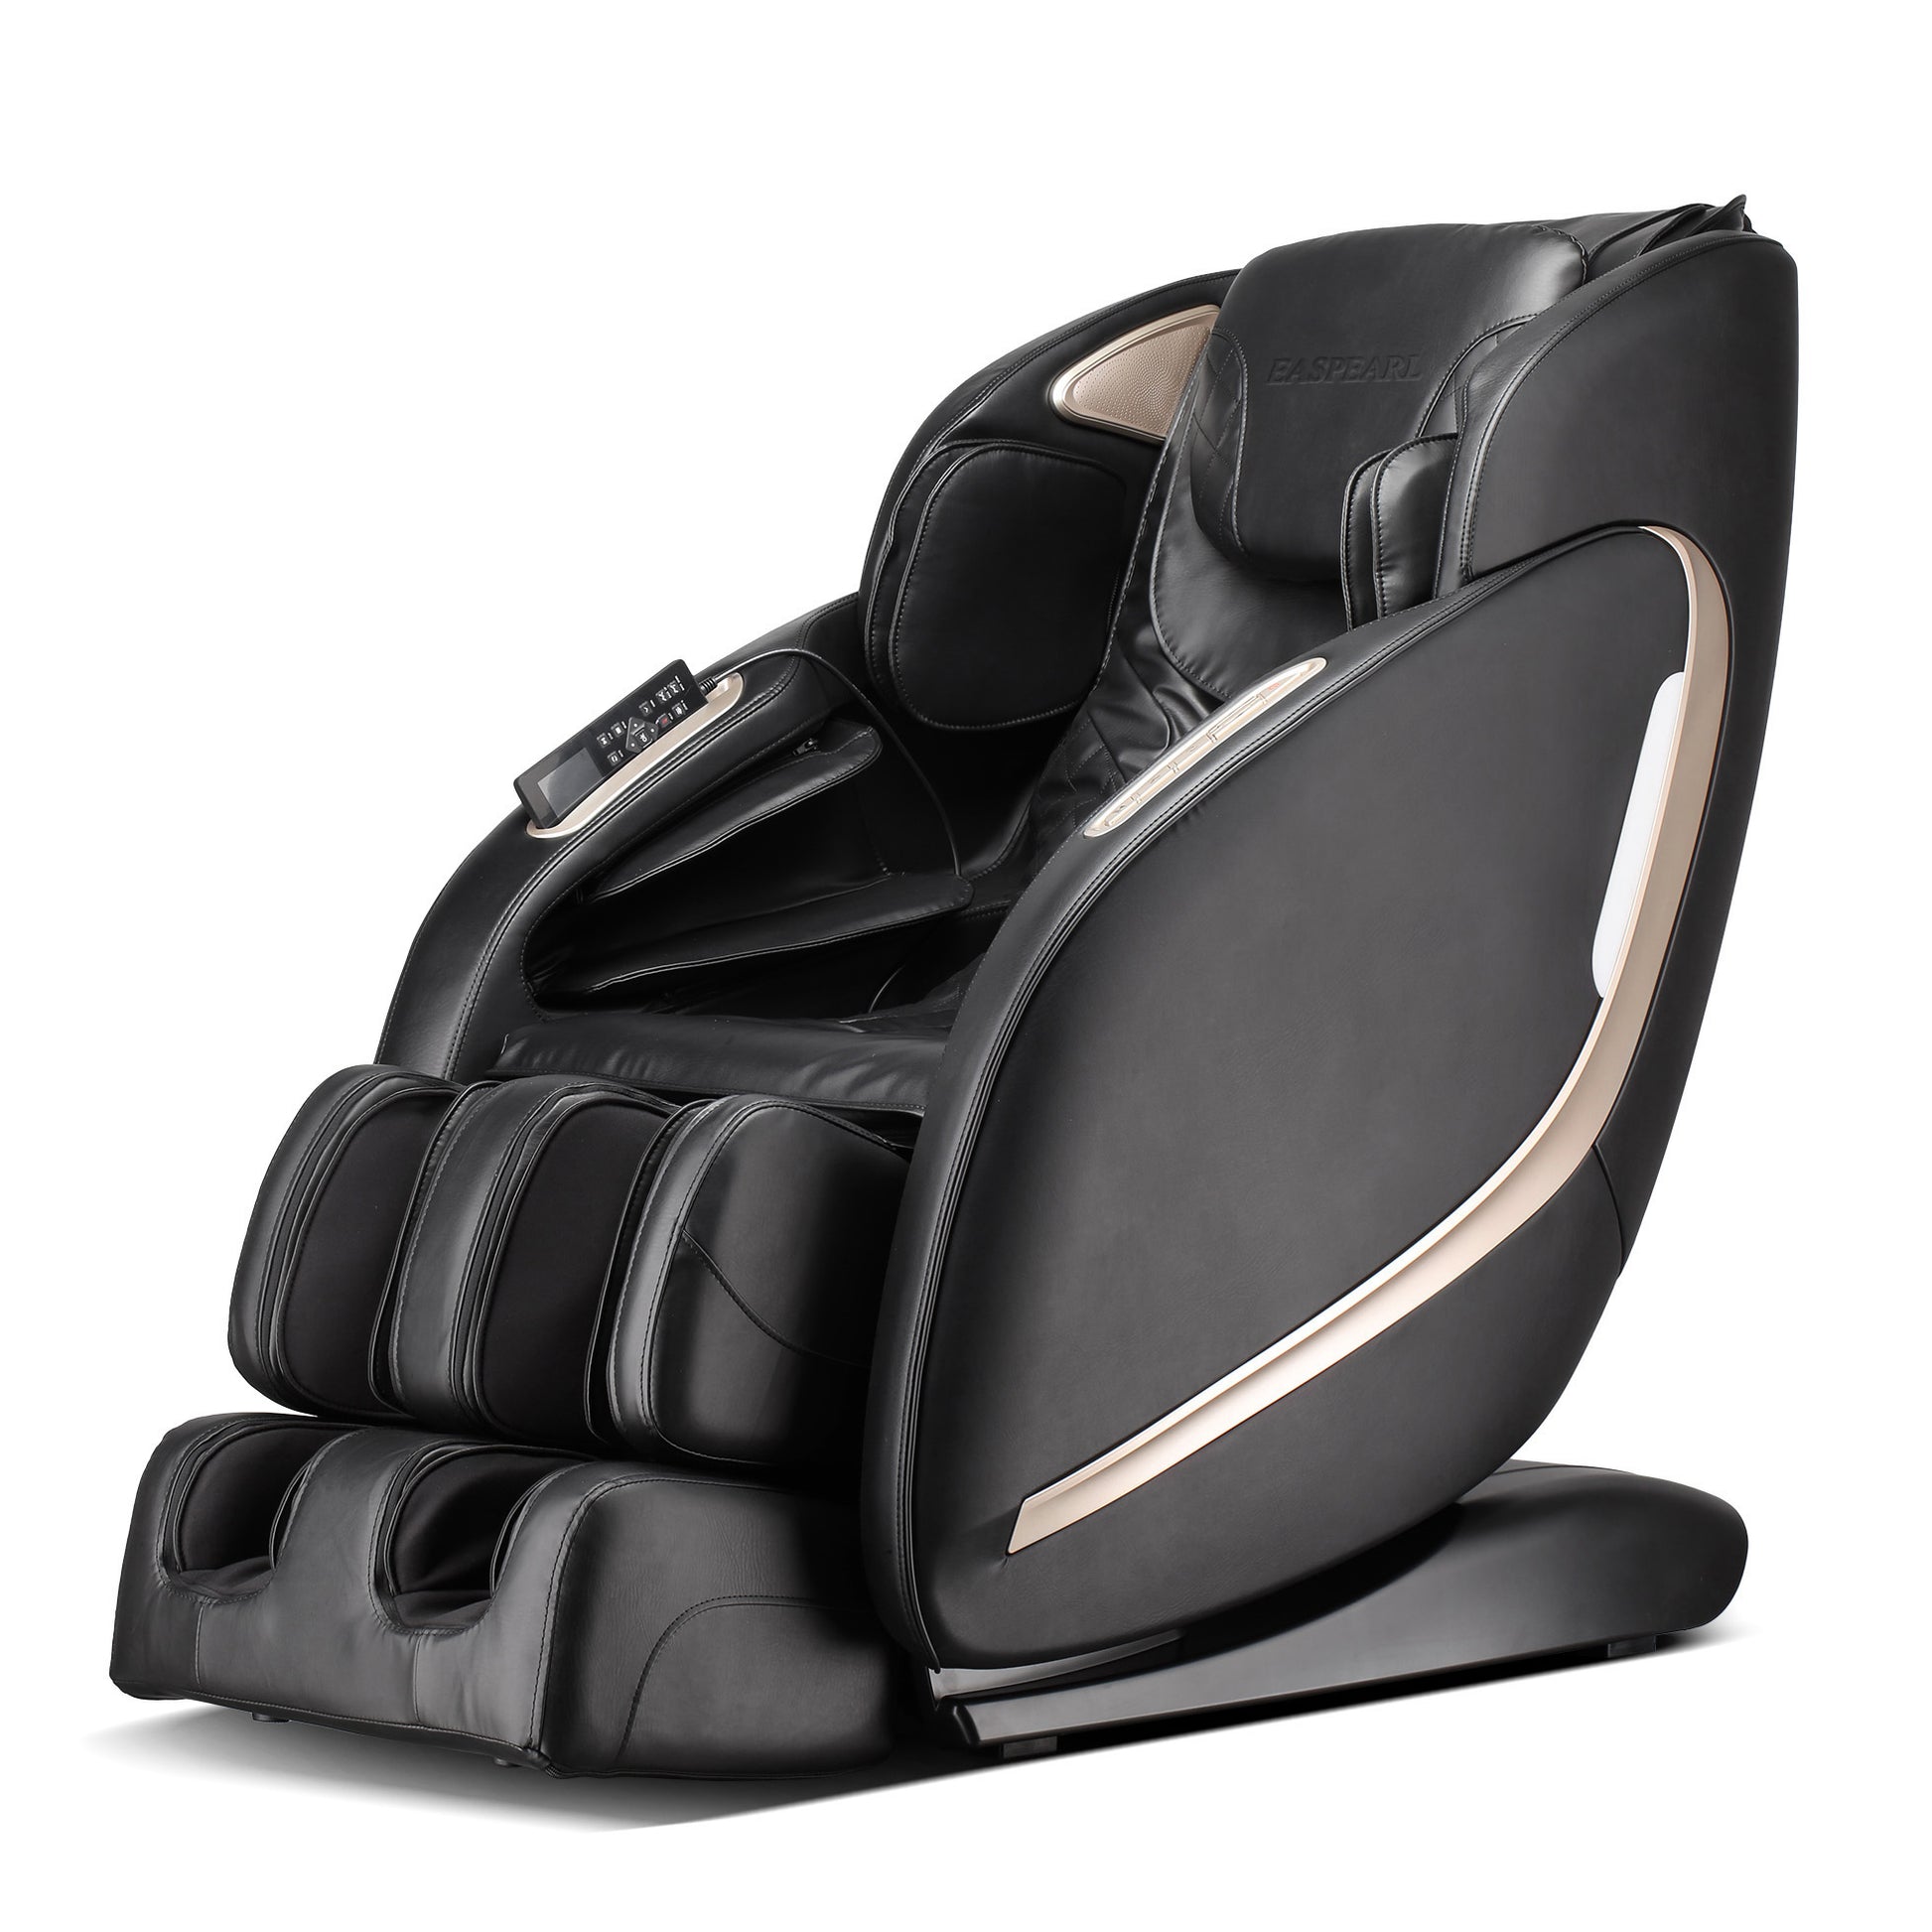 R8069 Amazon Best Seller APP Control Roller Zero-G Massage Chair